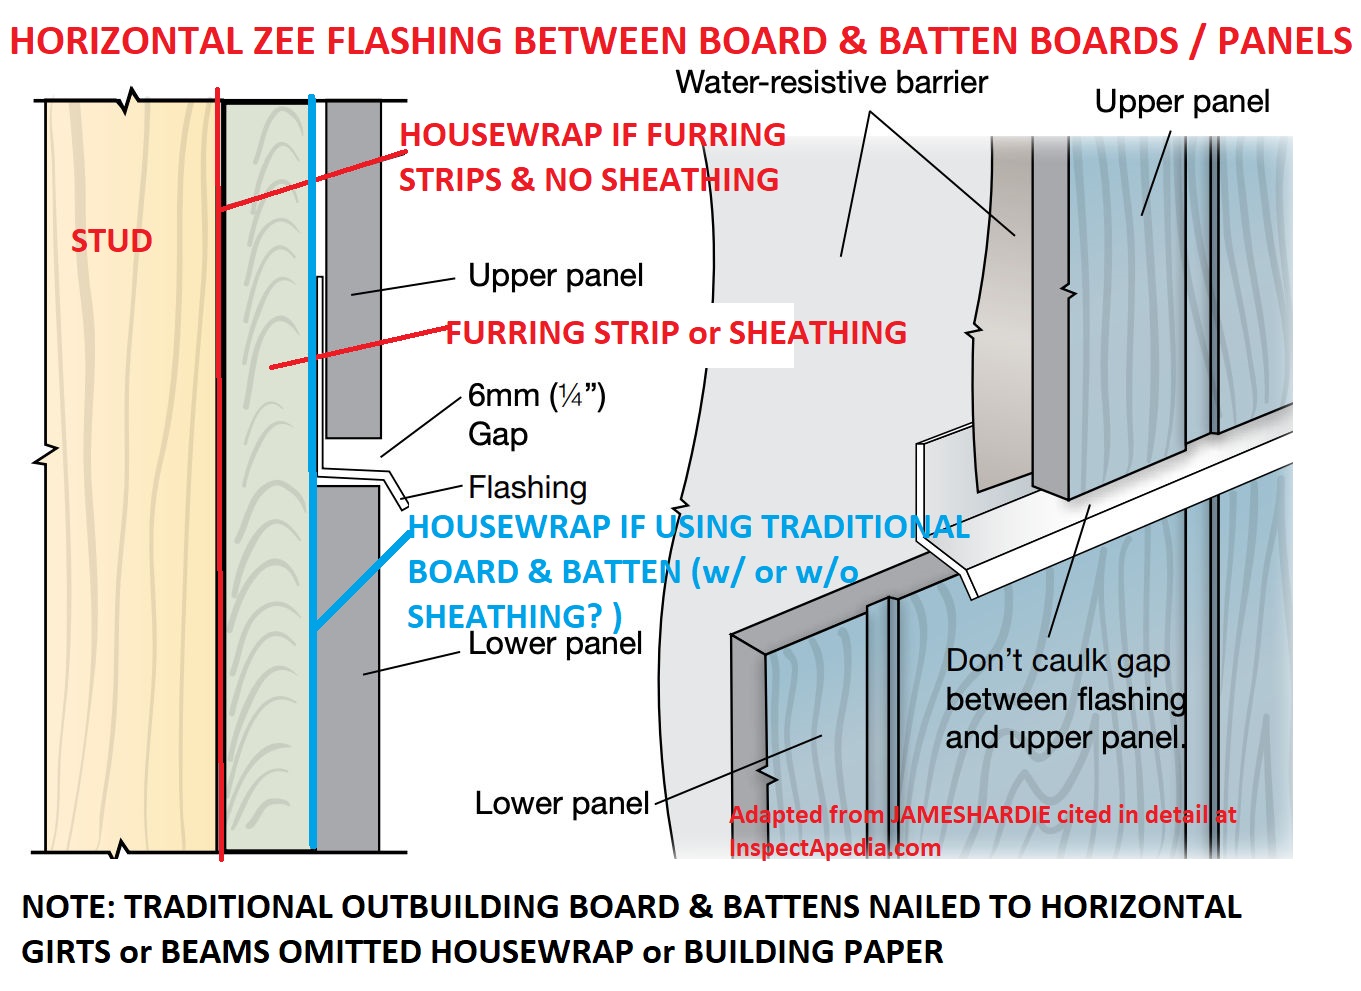 Board & Batten Siding Install, Paint, Maintain, Repair